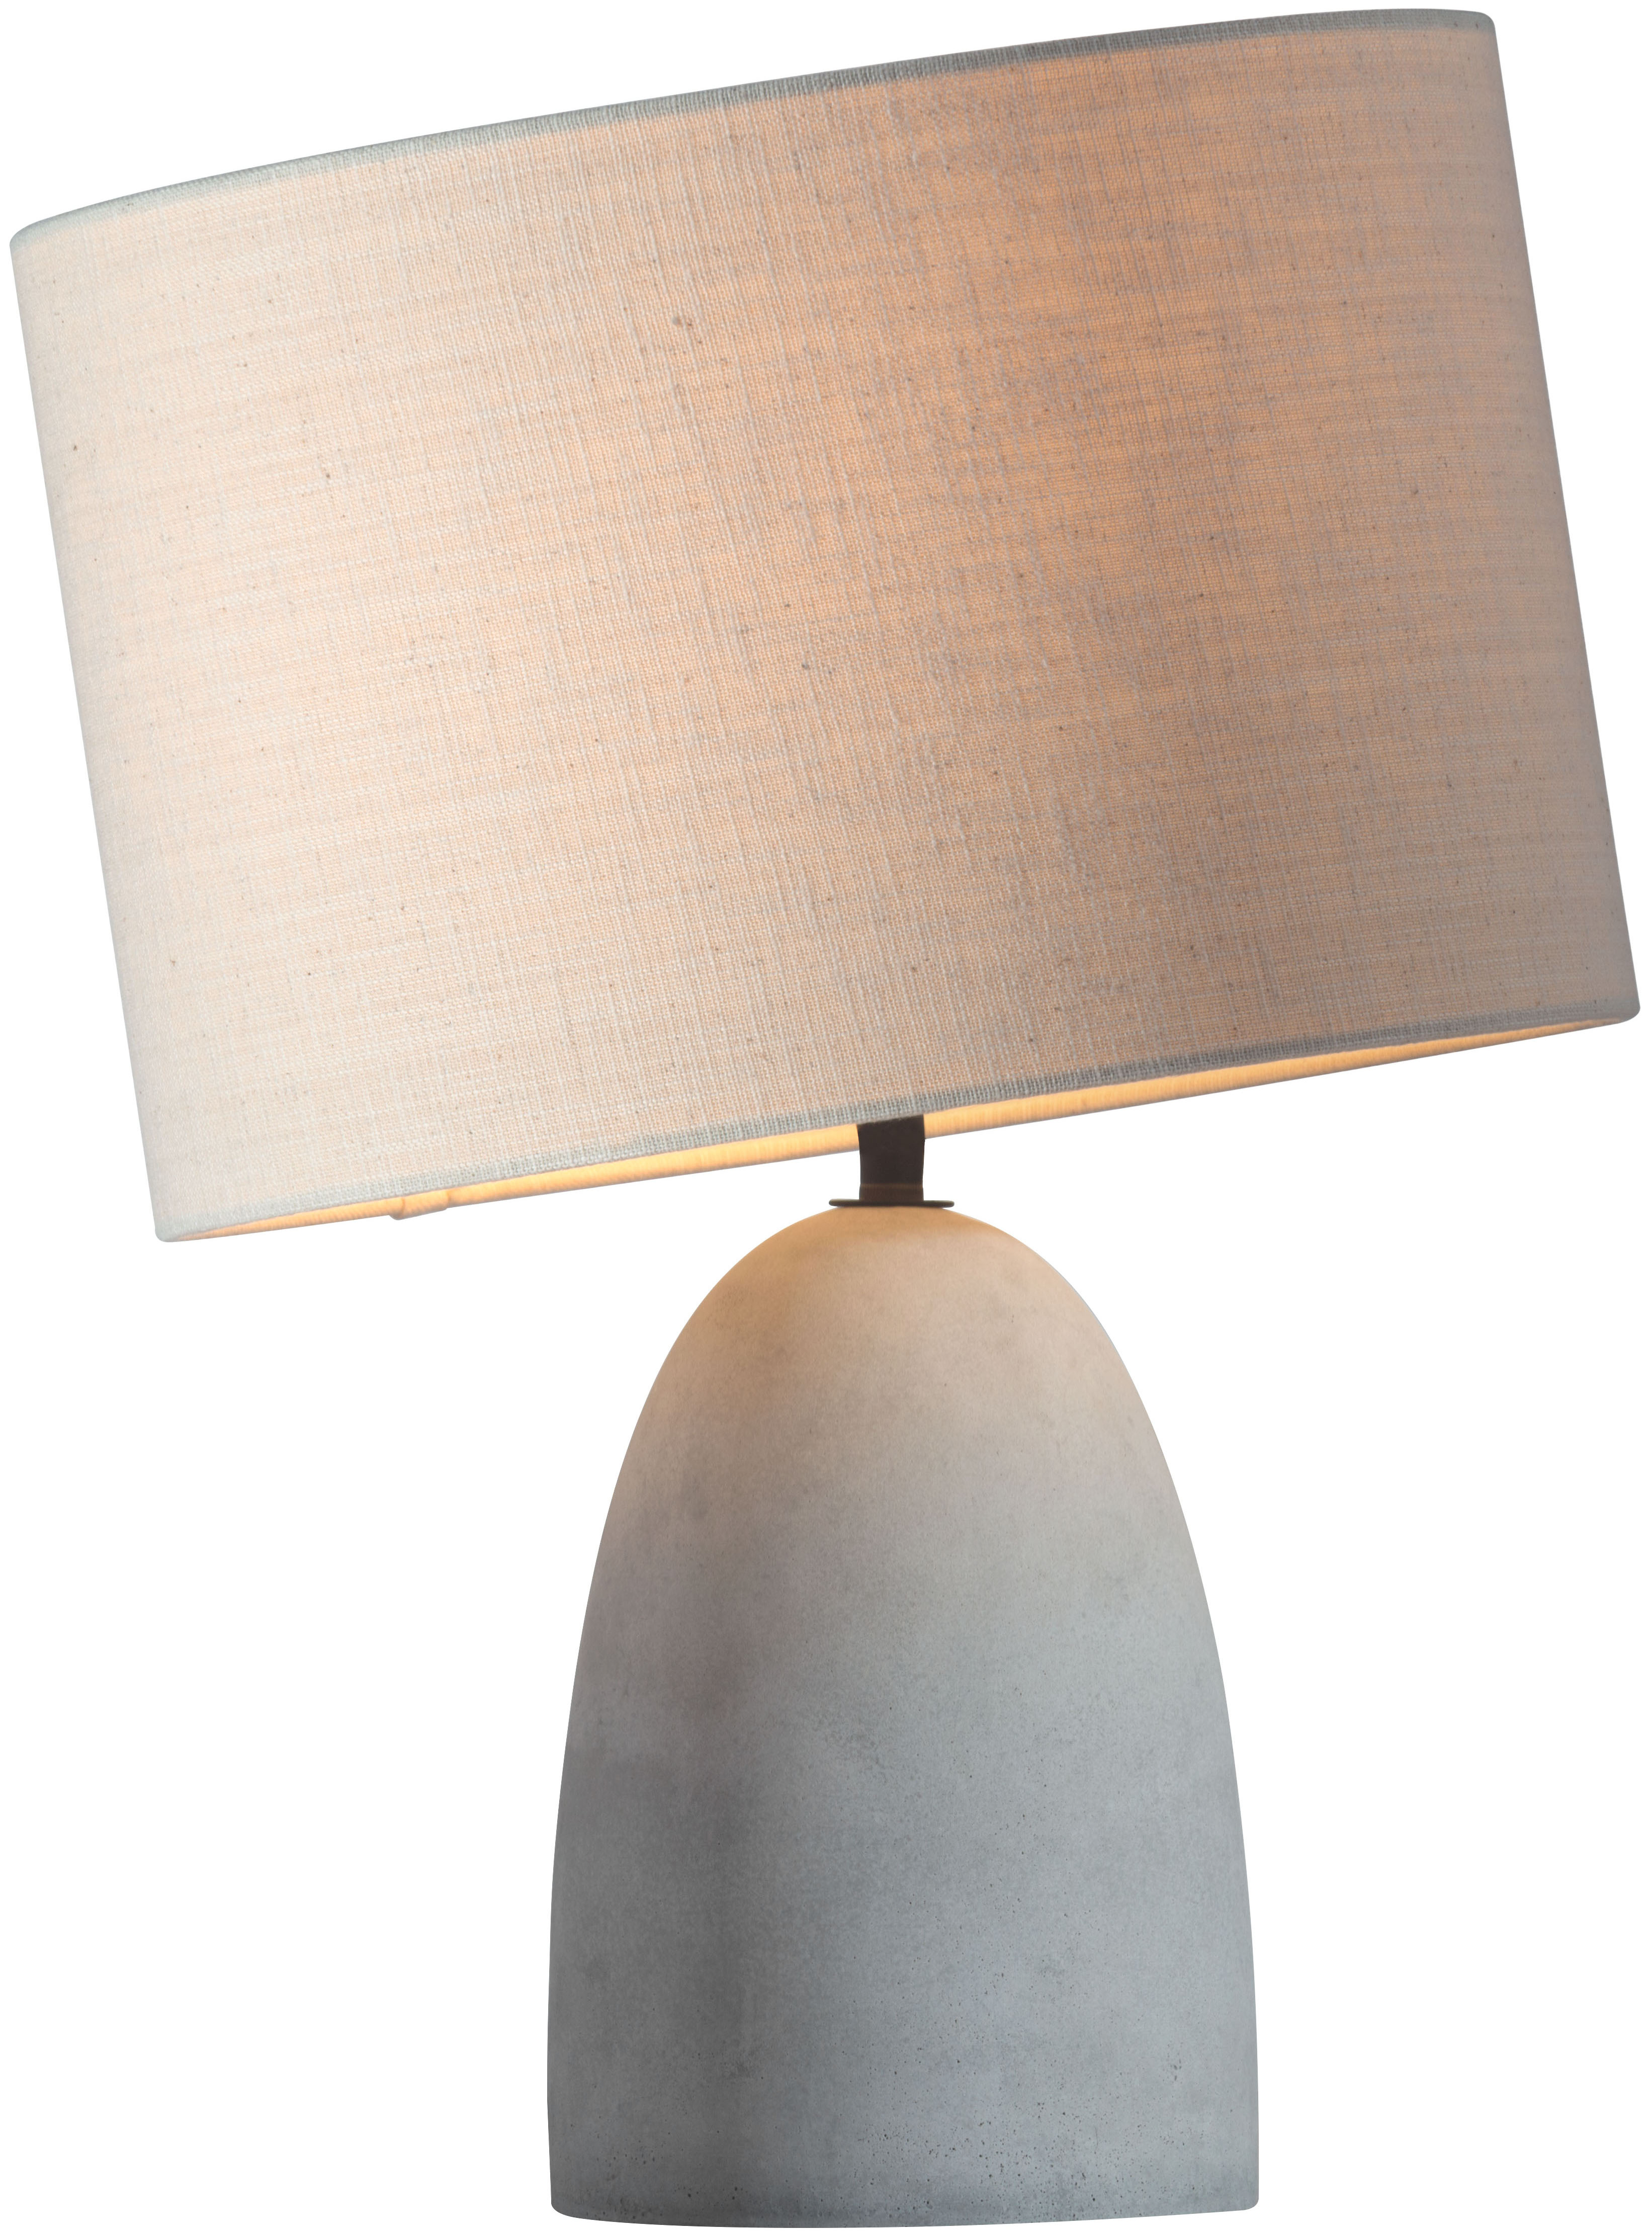 vigor table lamp